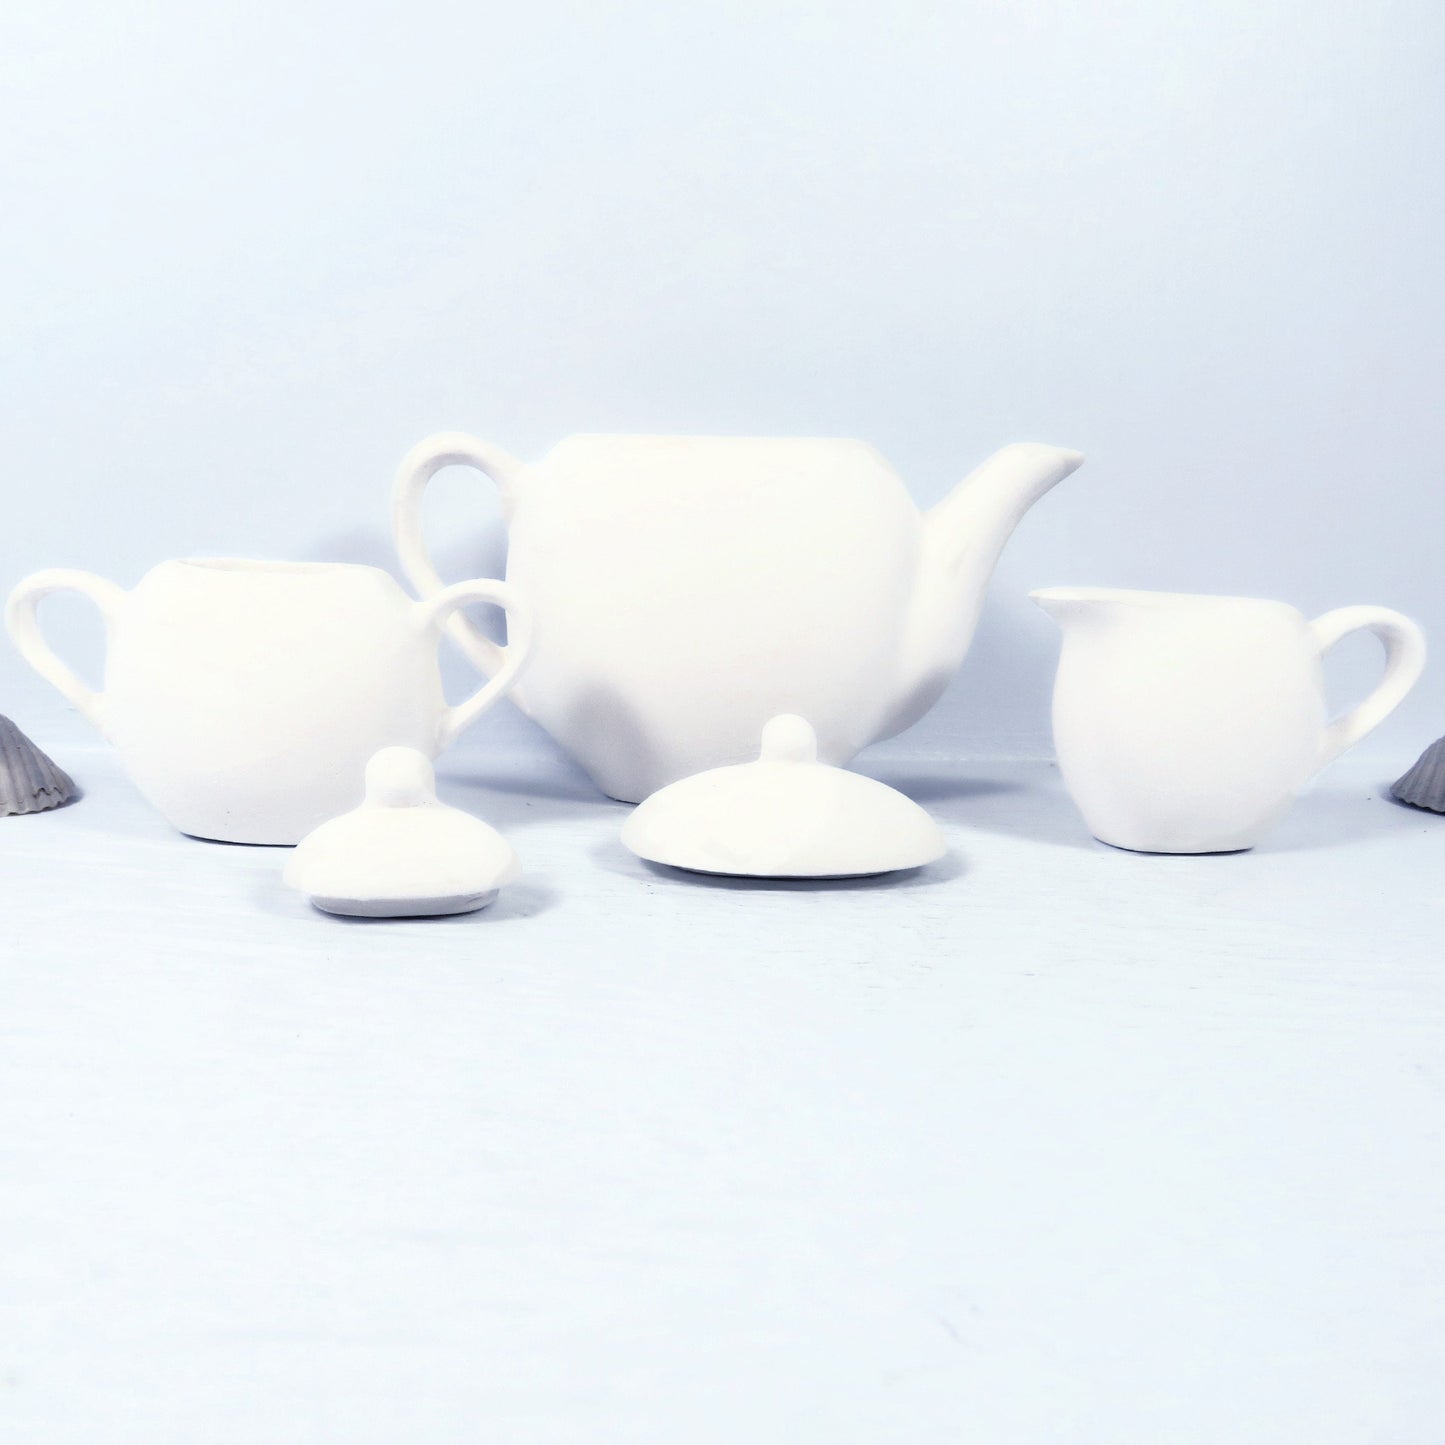 Miniature Unpainted Ceramic Tea Set / Paint it Yourself Tea Set / Ceramics to Paint / Paintable Ceramic Decor / Small Tea Pot and Cups